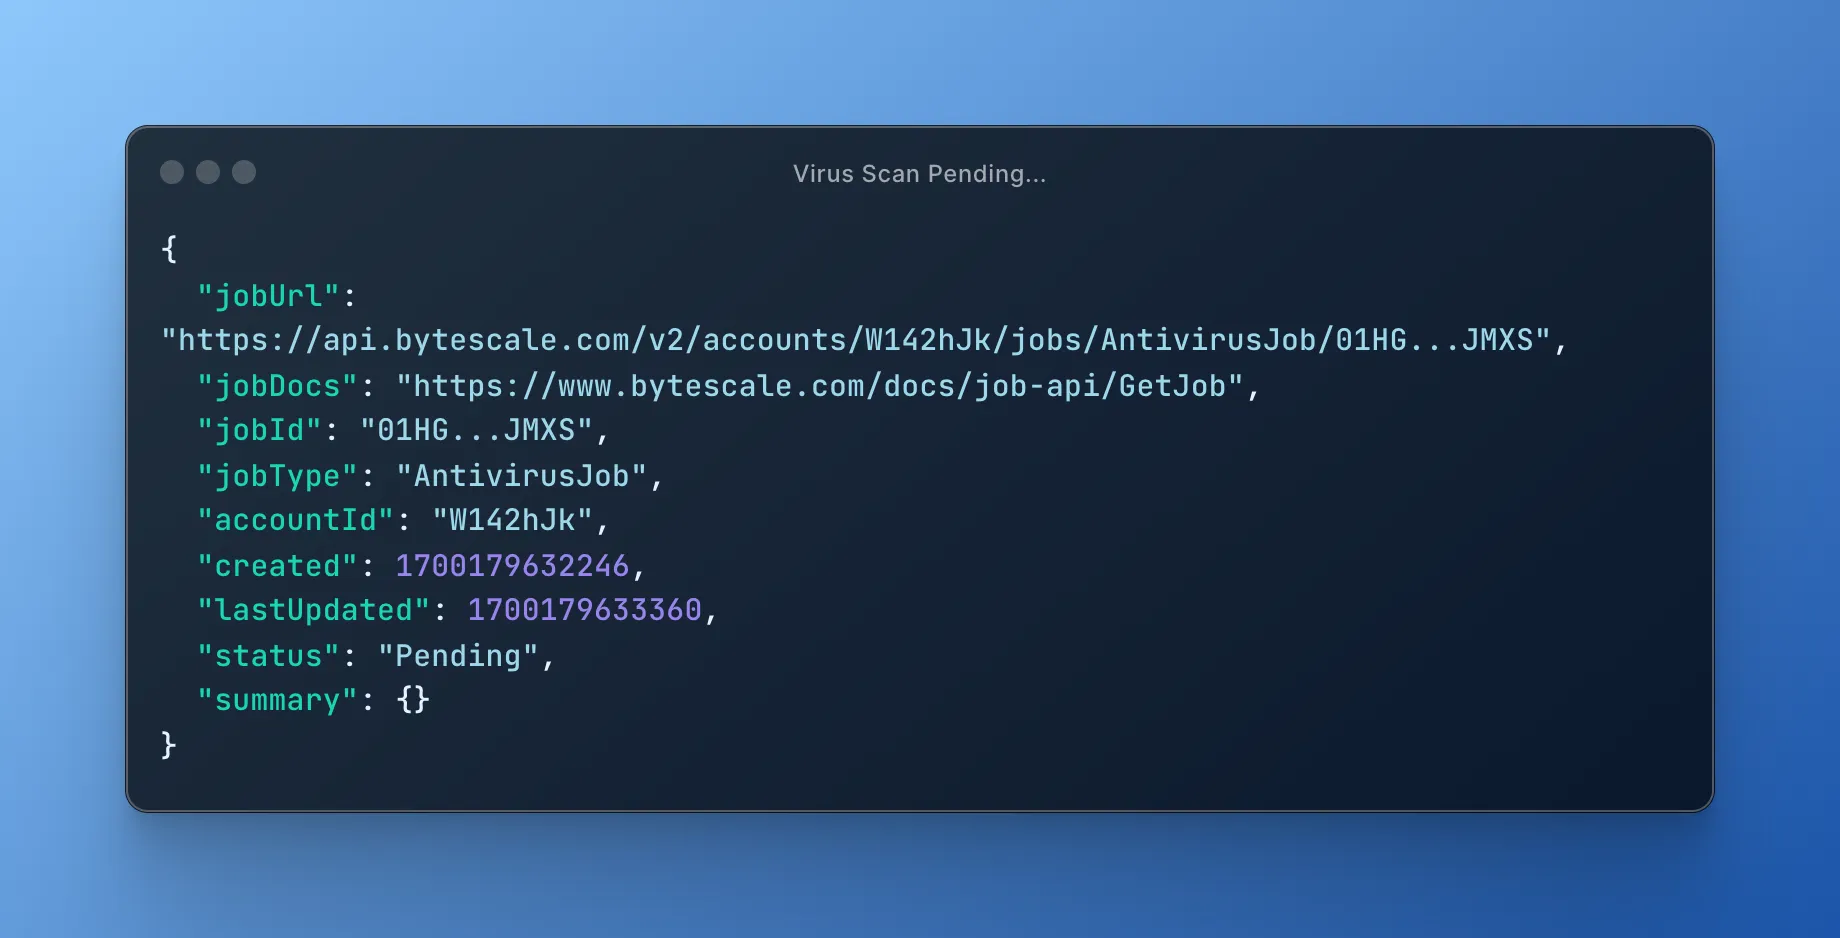 Screenshot of a pending virus scan job